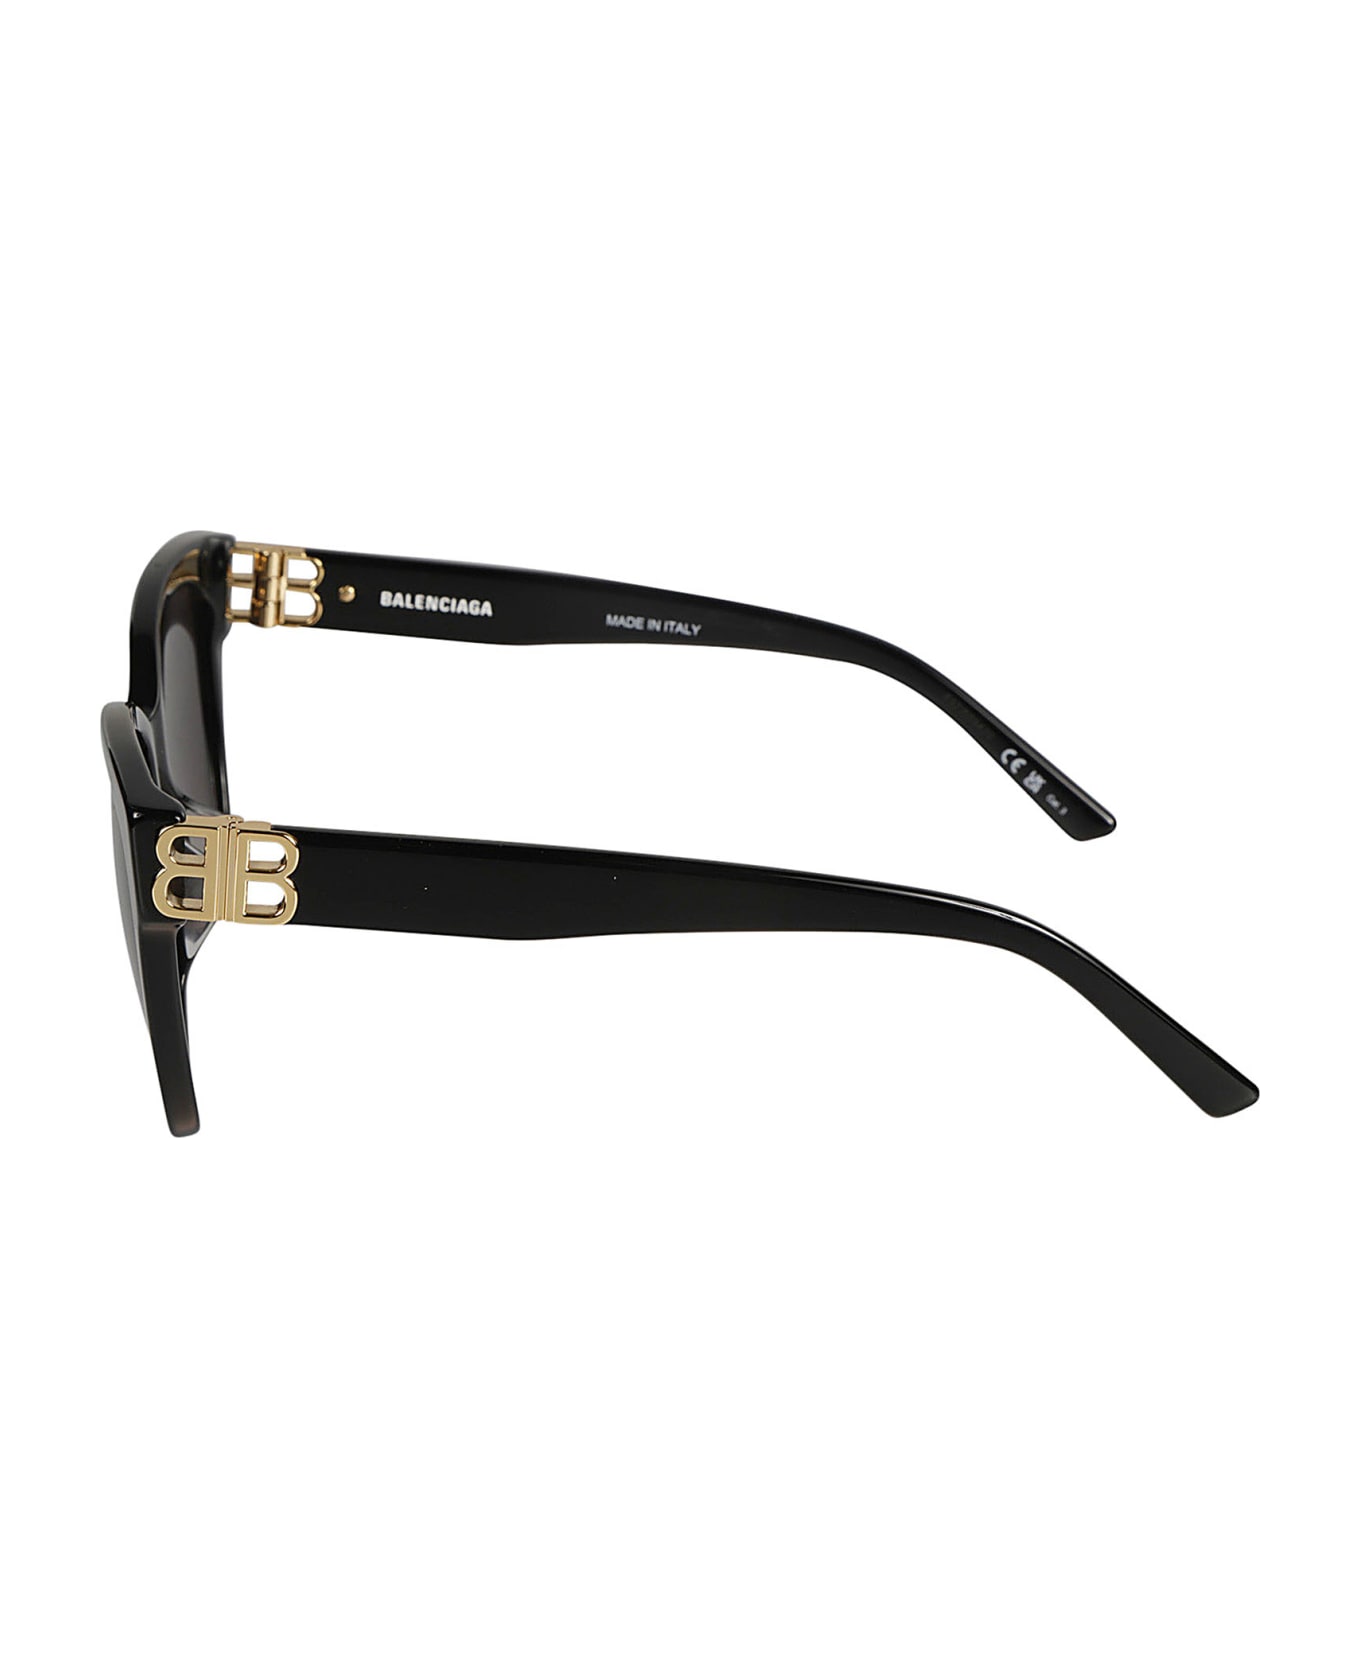 Balenciaga Eyewear Bb0102sa Sunglasses - 001 BLACK GOLD GREY サングラス